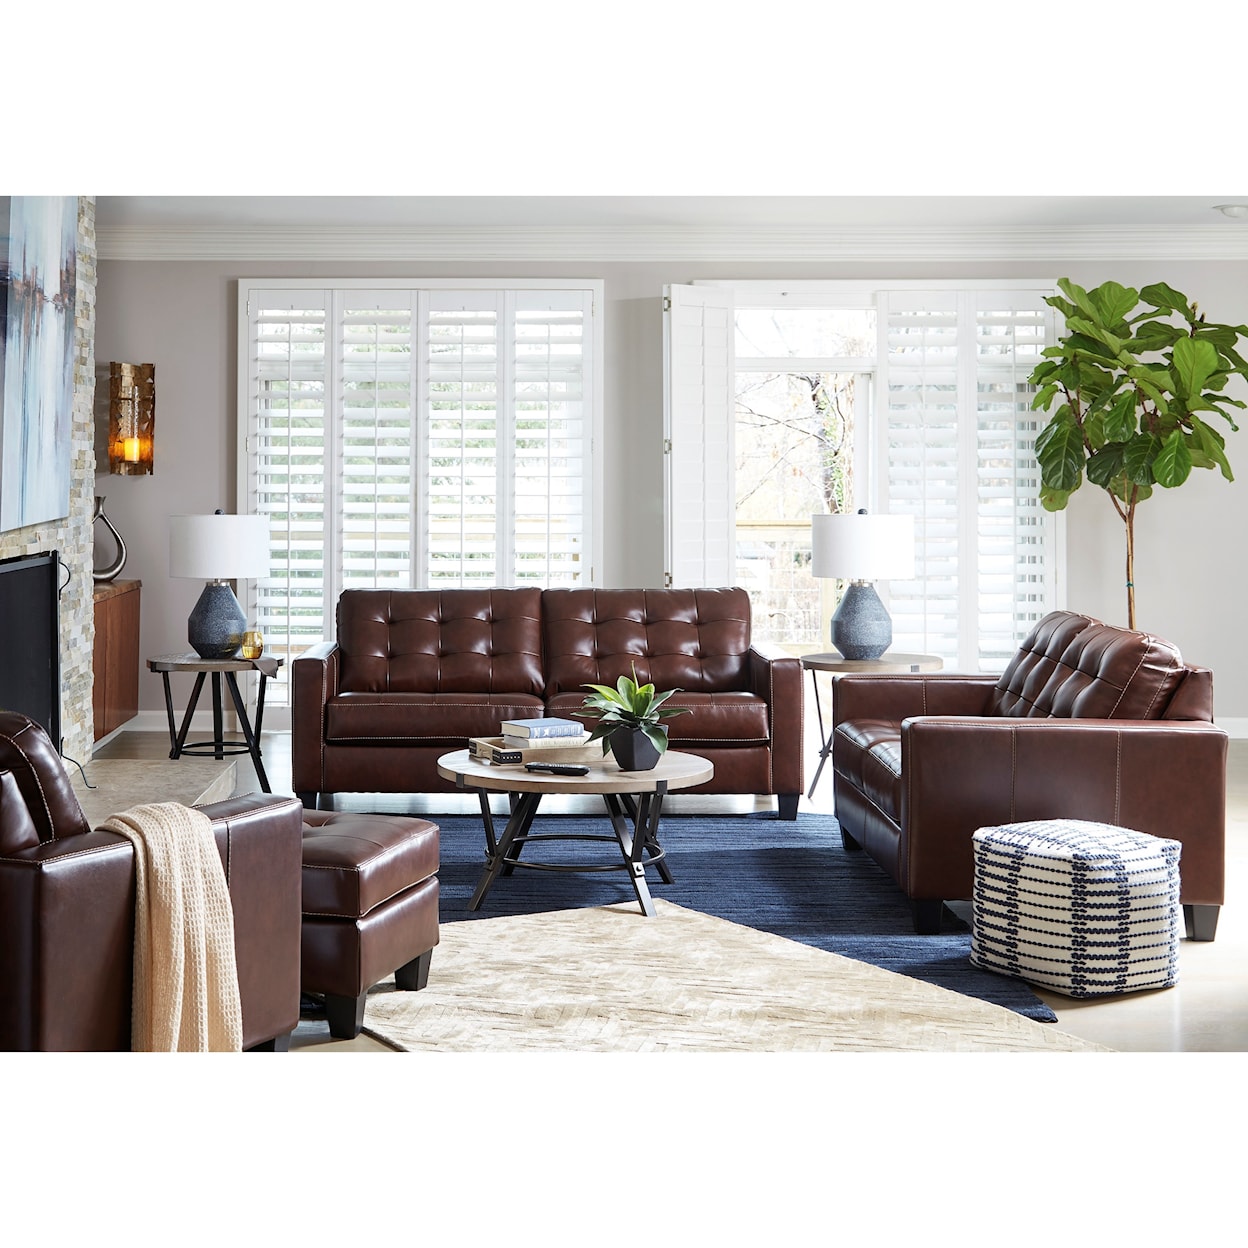 Ashley Furniture Signature Design Altonbury Stationary Living Room Group